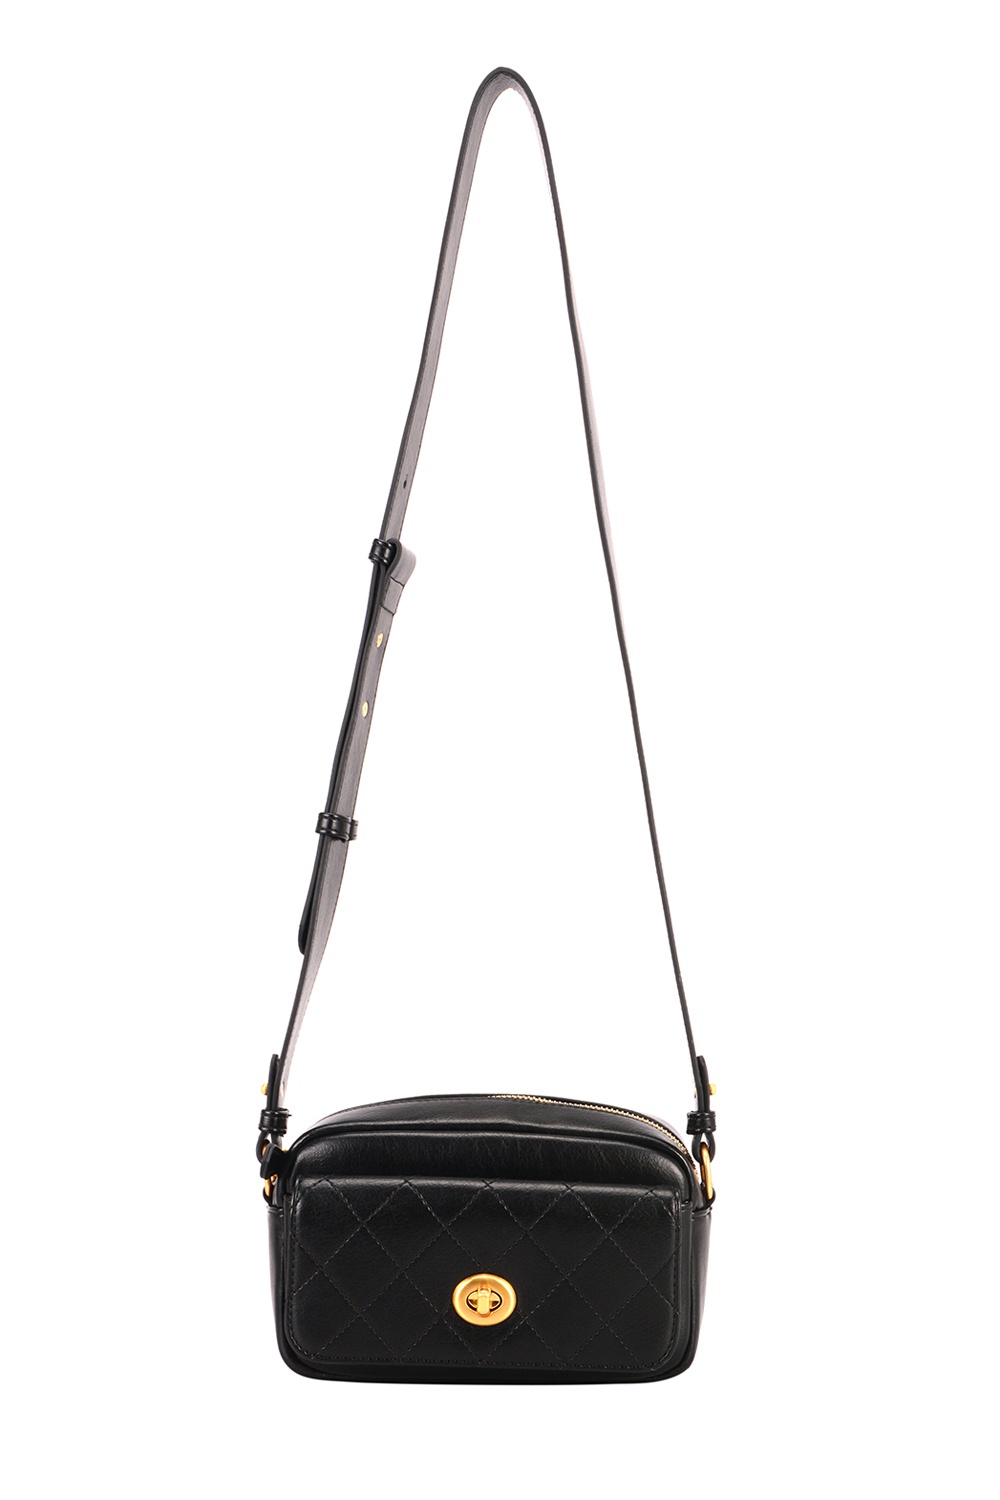 Odel Women's Black Crossbody Bag | Odel.lk